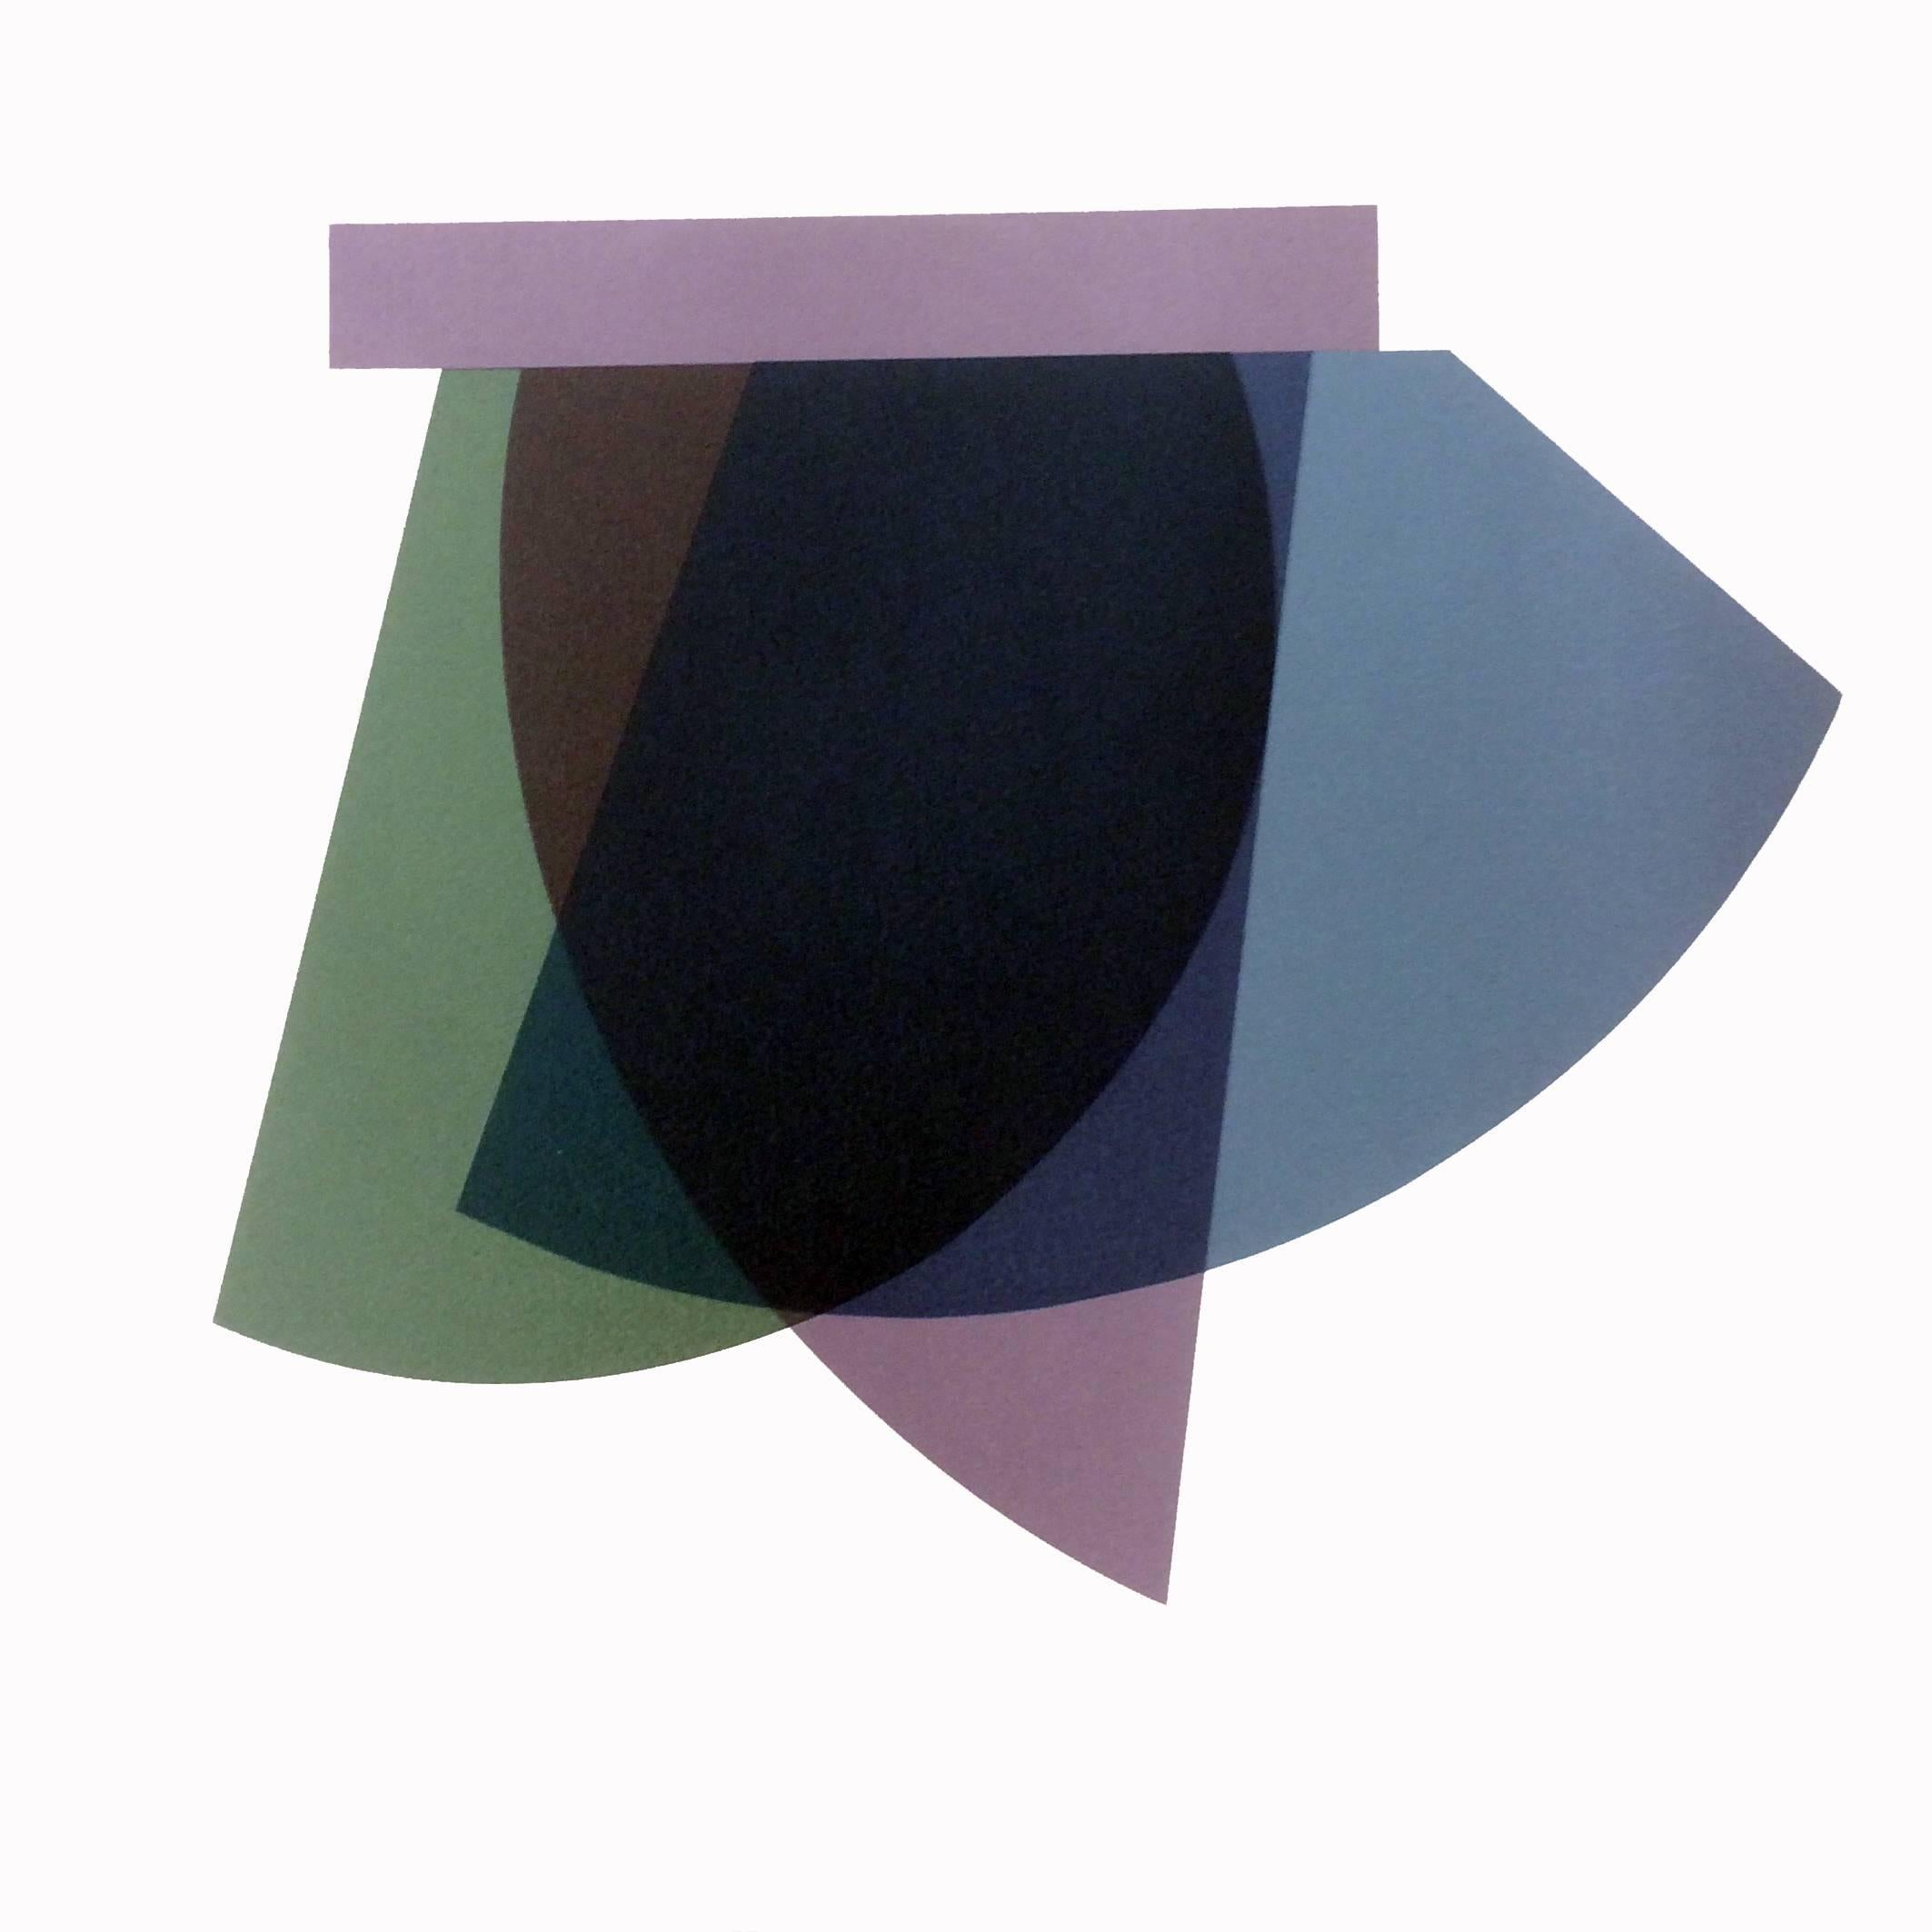 Willard Boepple Abstract Print - W-3 8.3.10 B